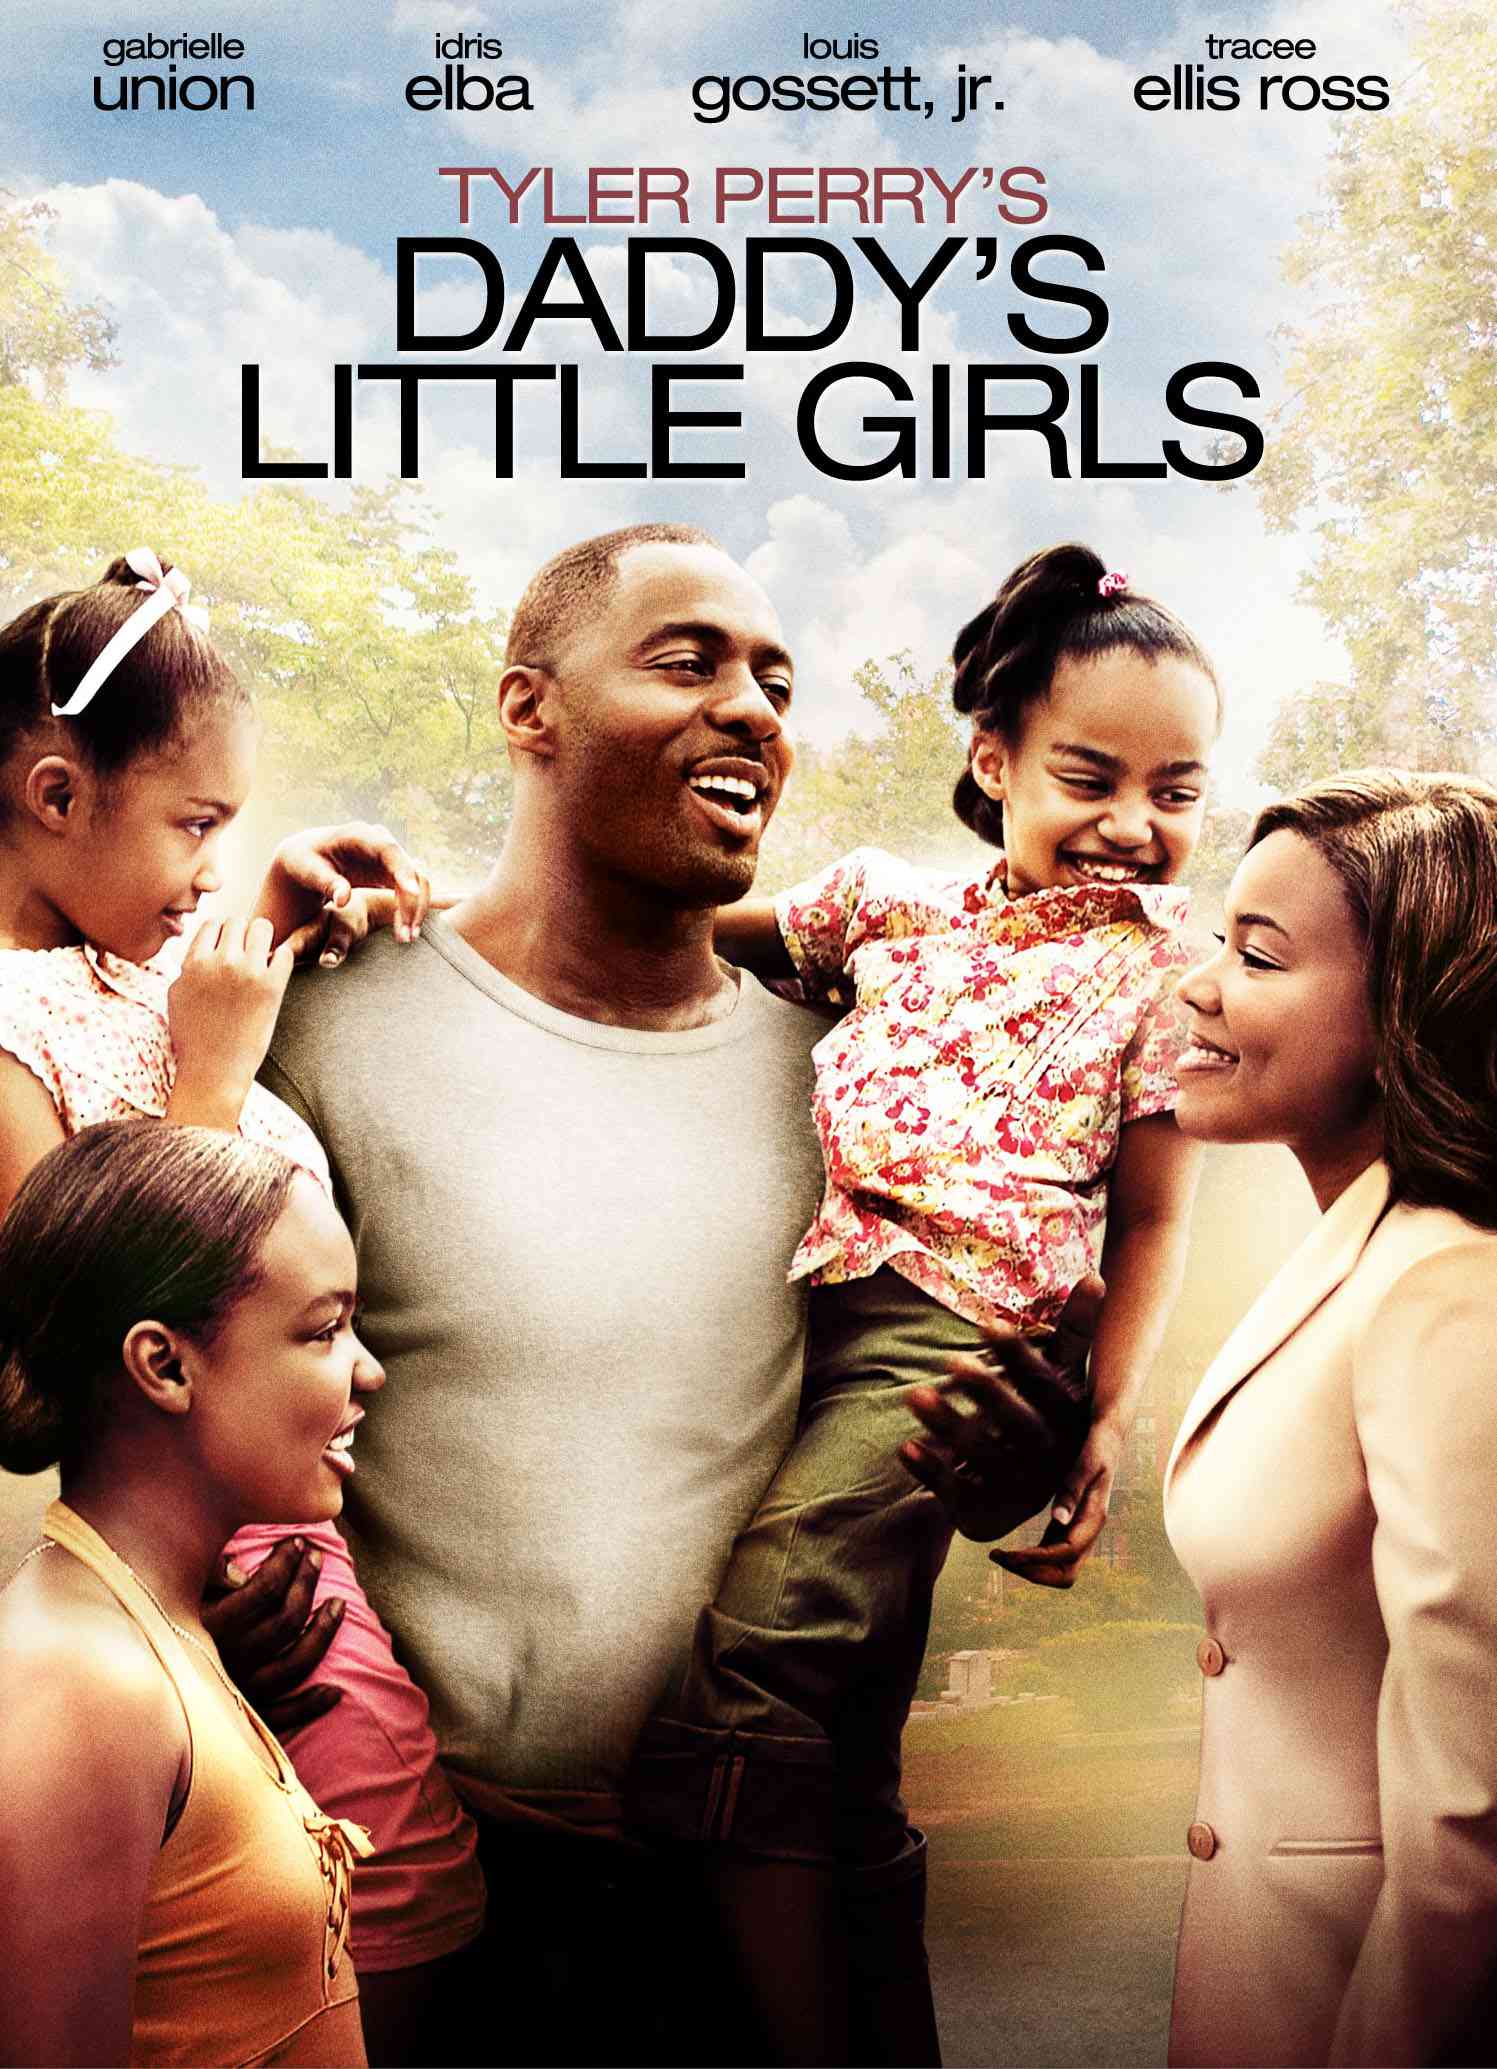 FULL MOVIE: Daddy’s Little Girls (2007) [Romance]